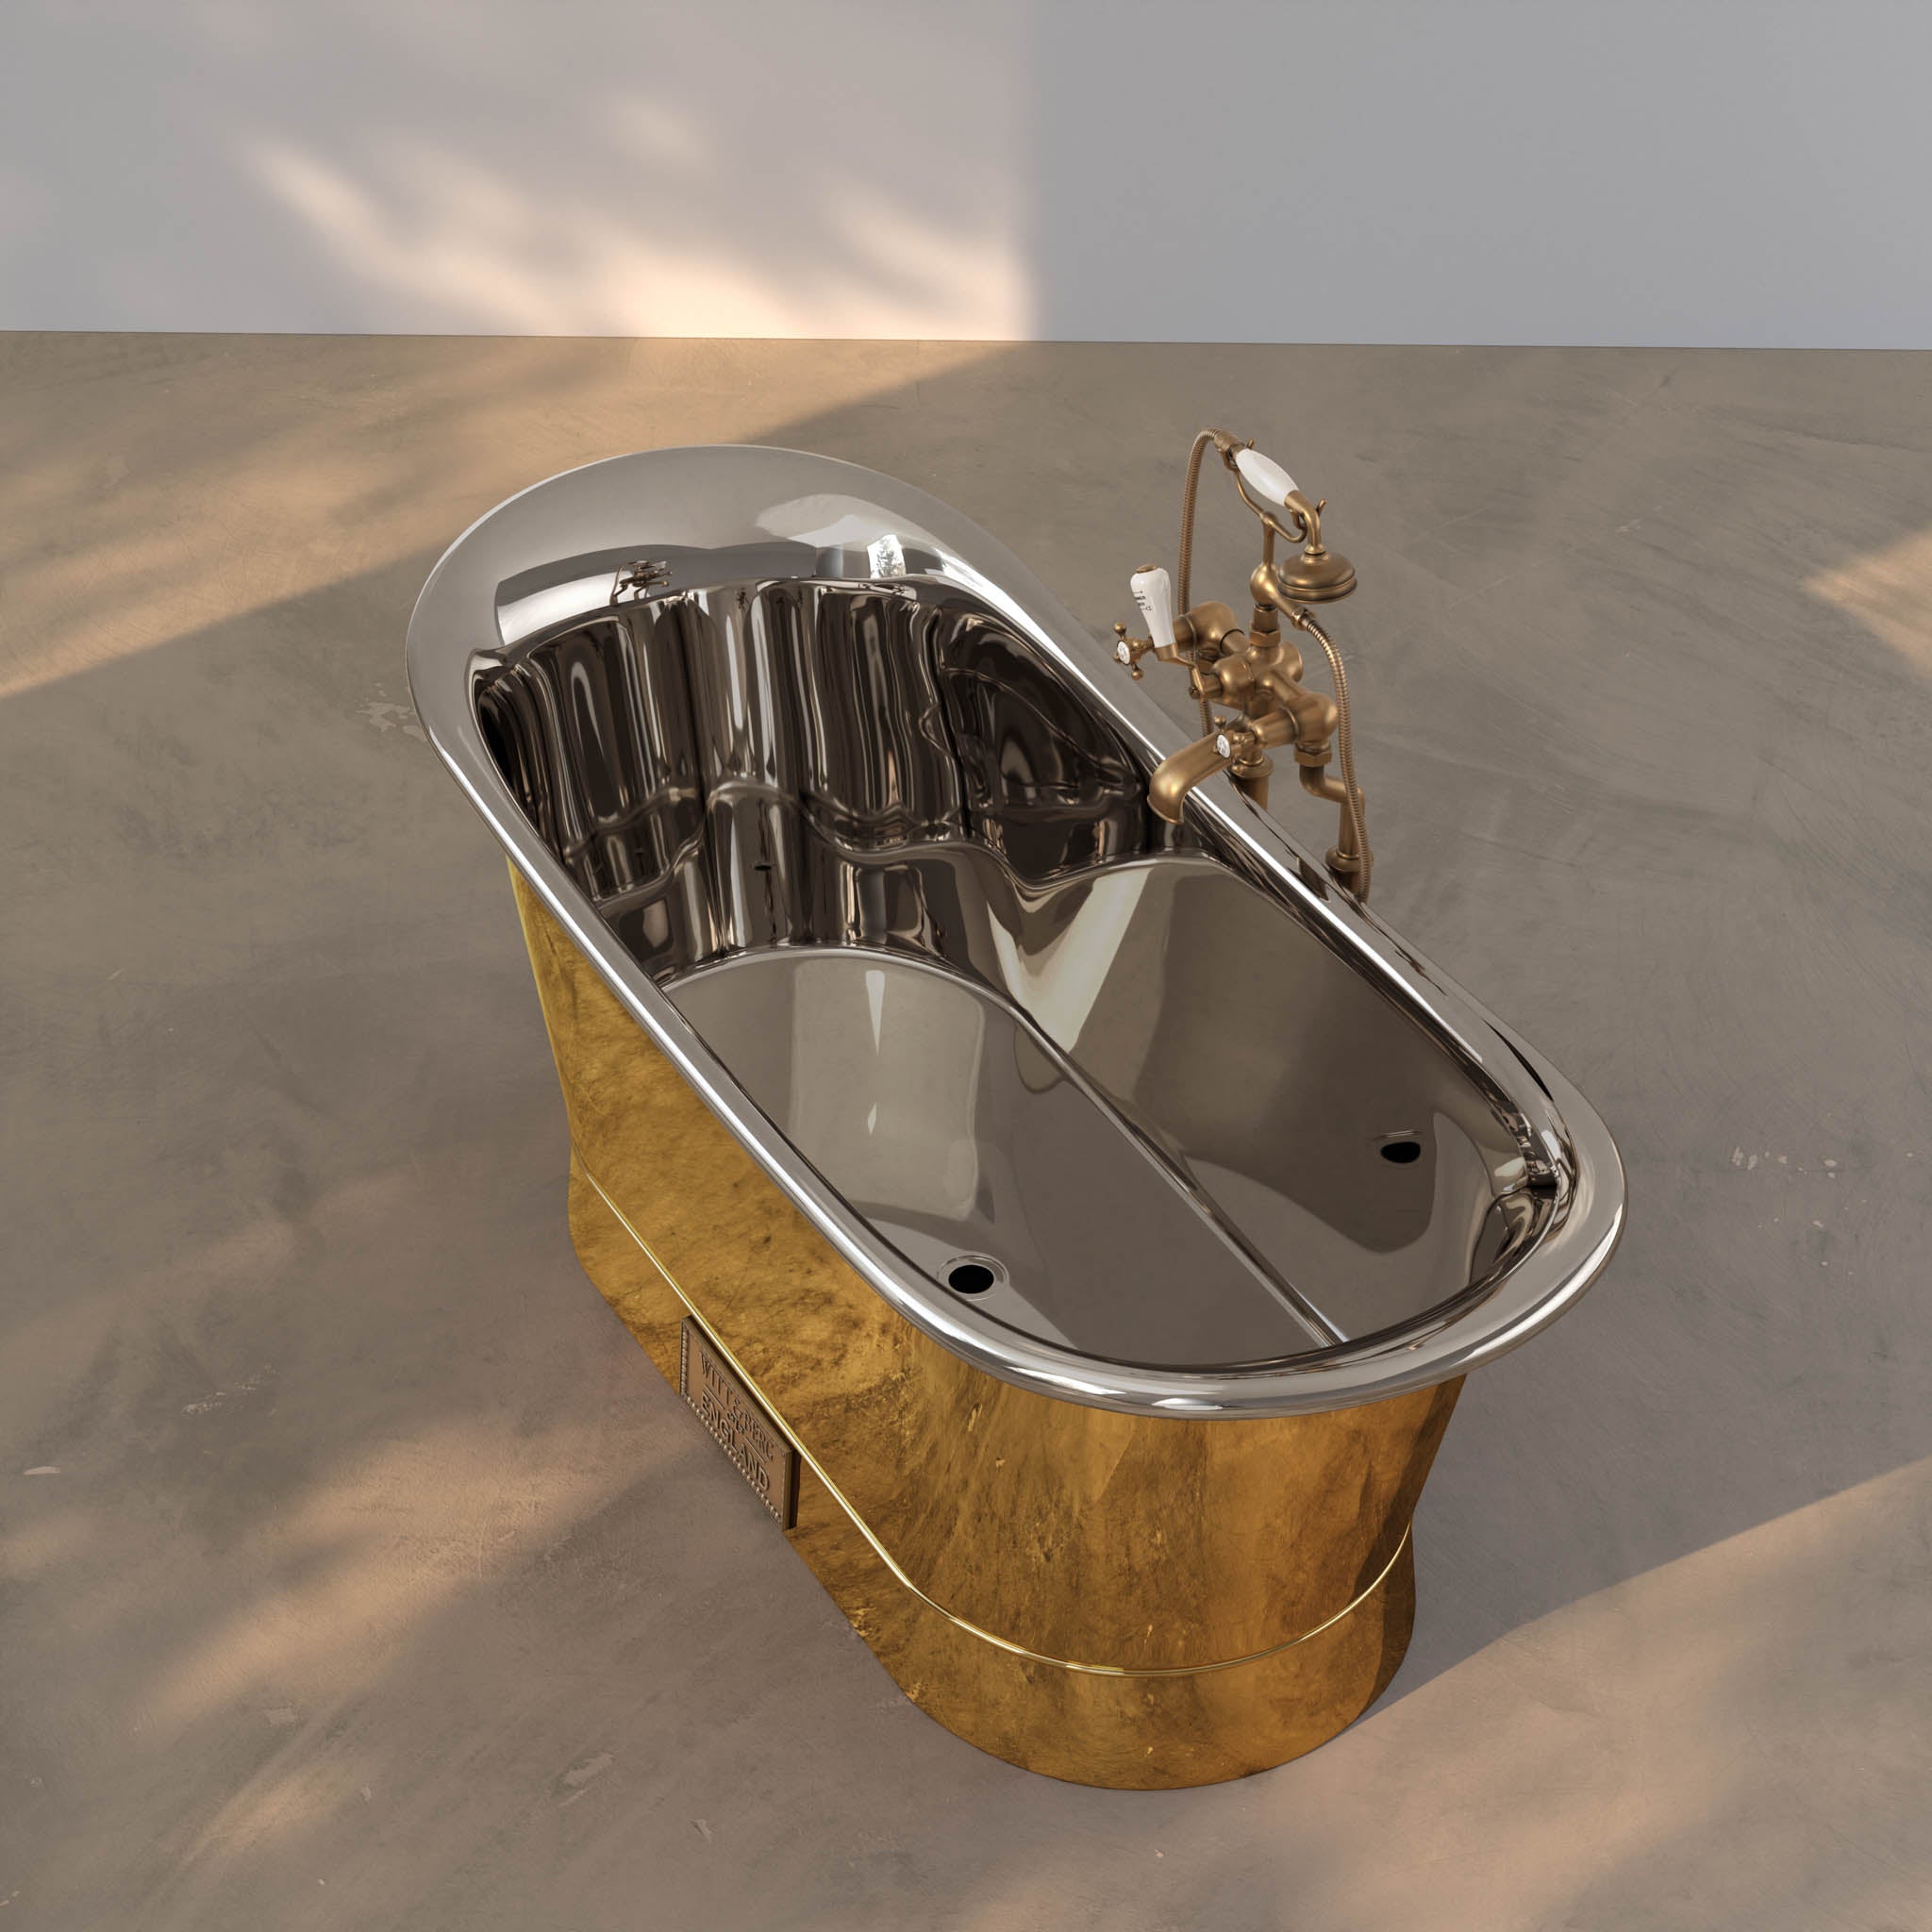 Babington Polished Brass & Polished Nickel Freestanding Bath